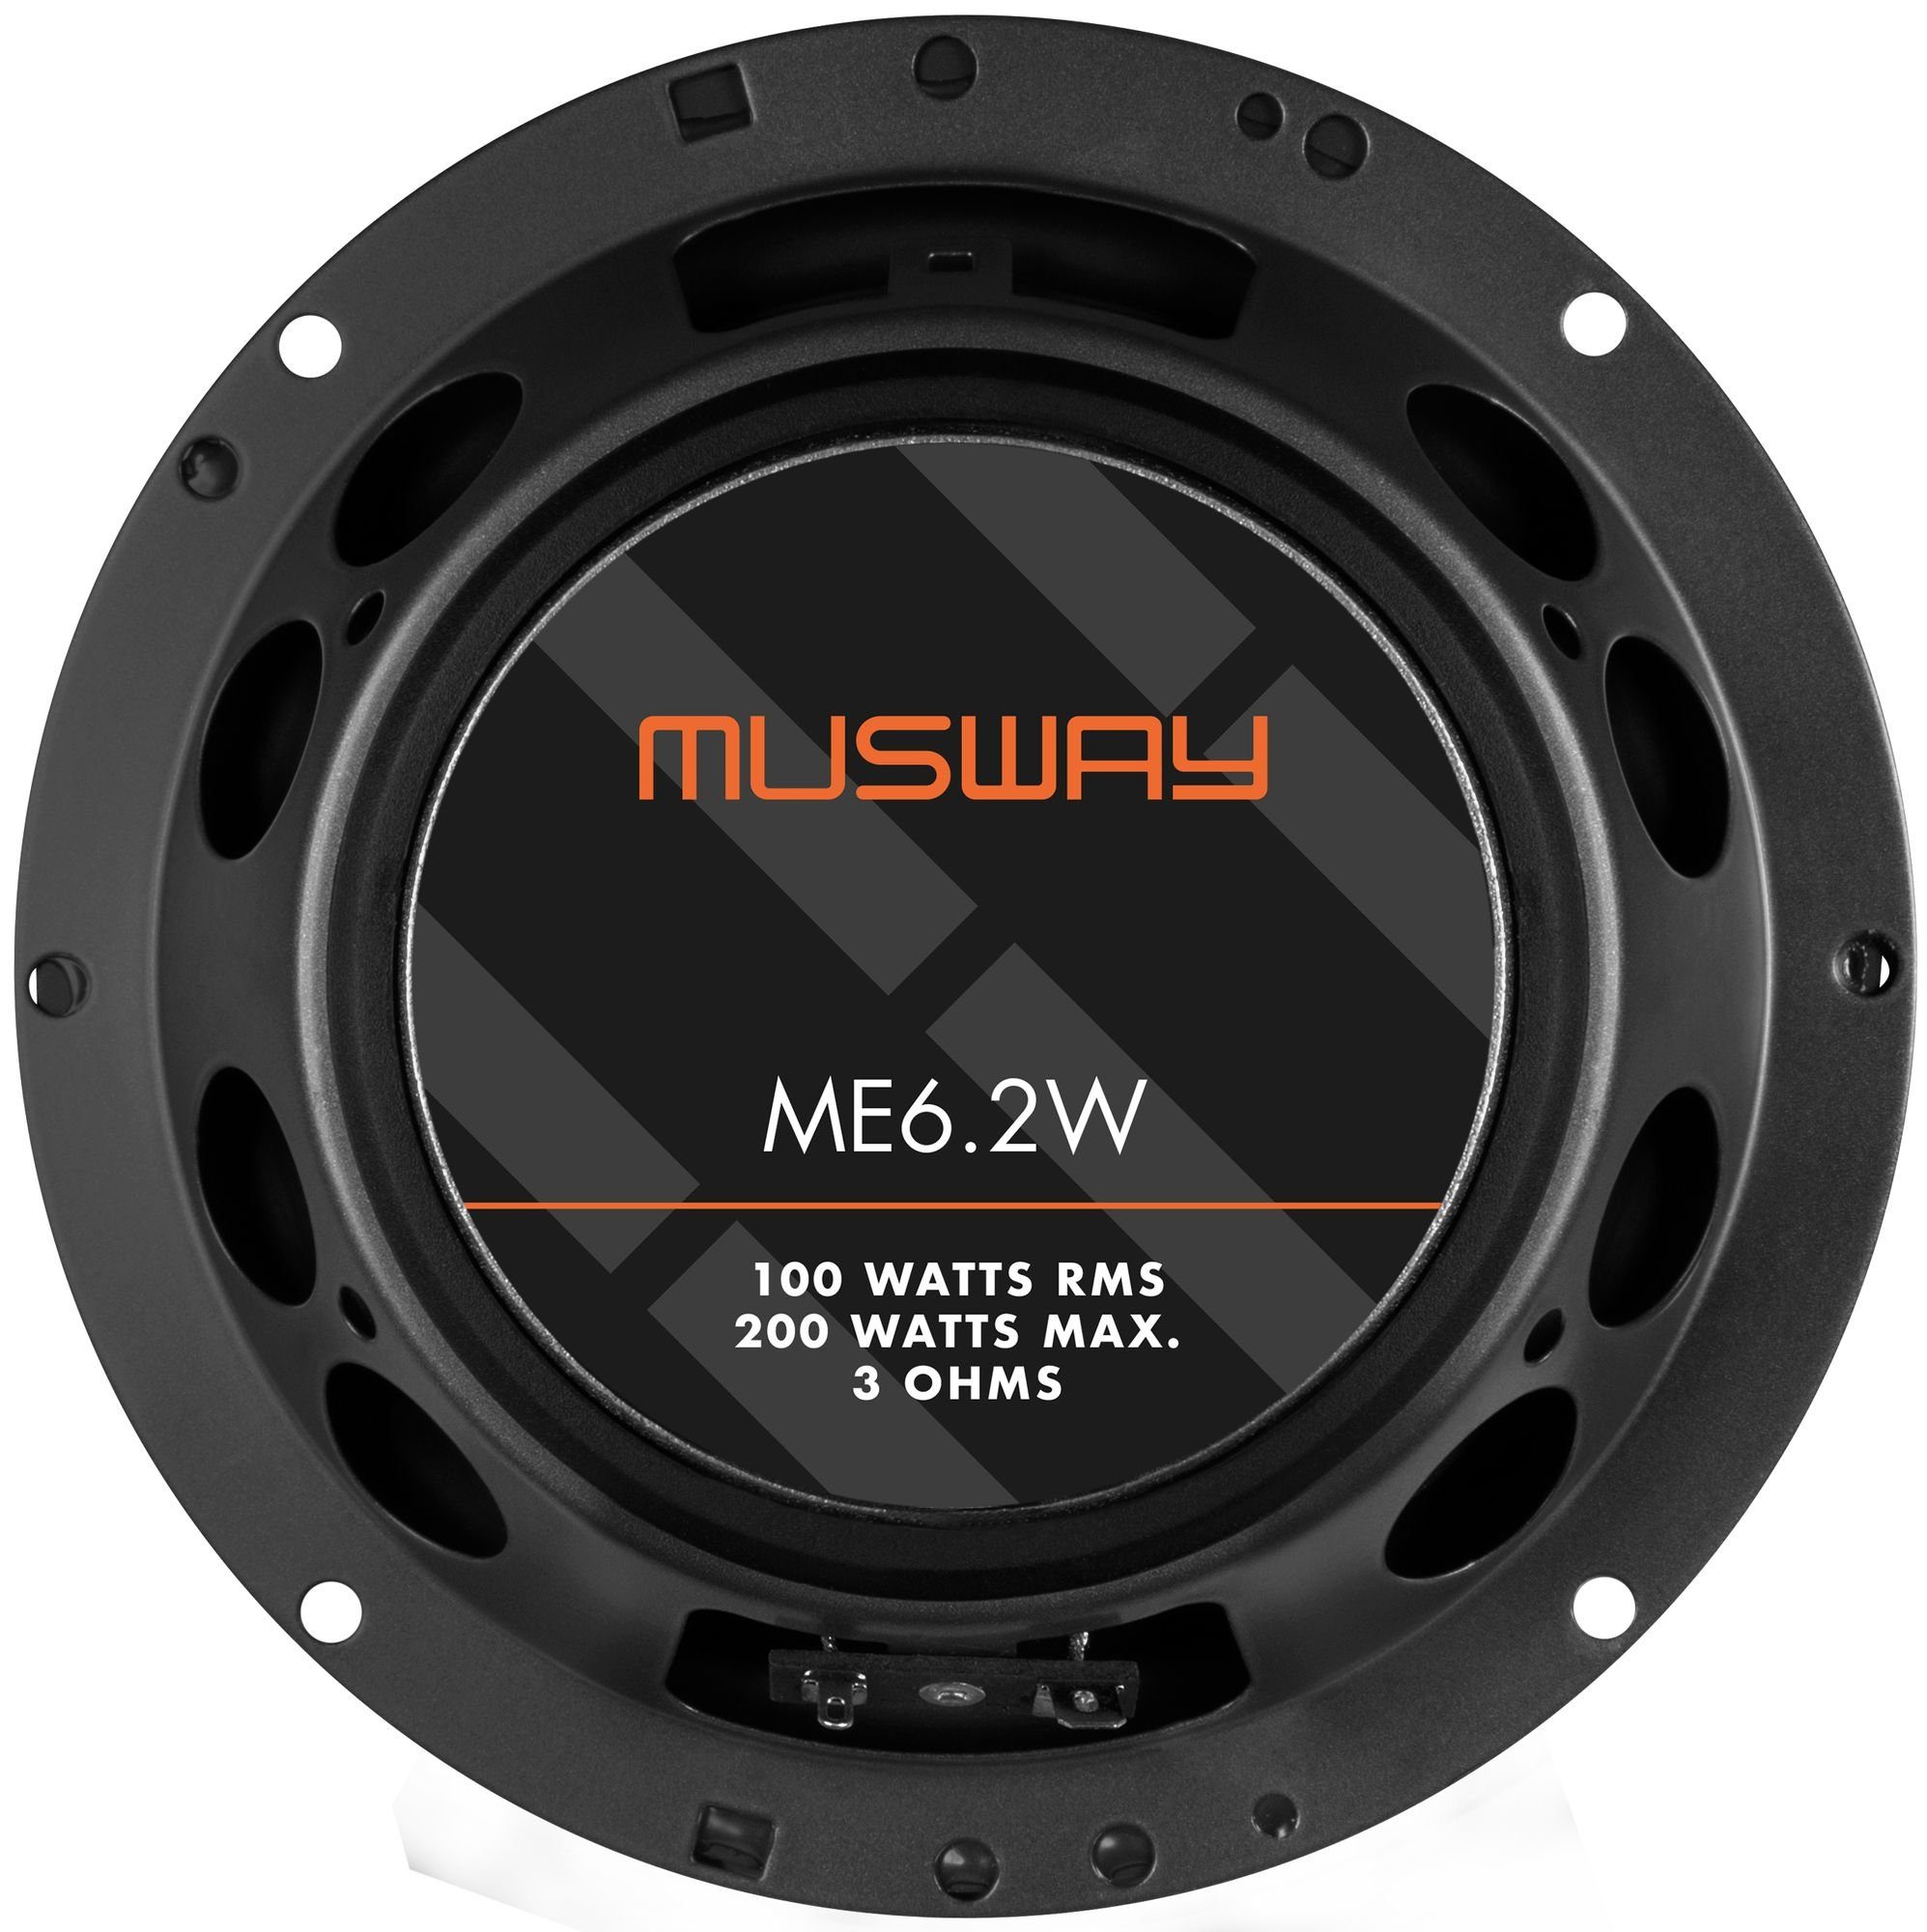 (Musway Kickbass Lautsprecher Musway Musway 16,5cm - ME6.2W - Lautsprecher ME6.2W Auto-Lautsprecher Kickbass) 16,5cm